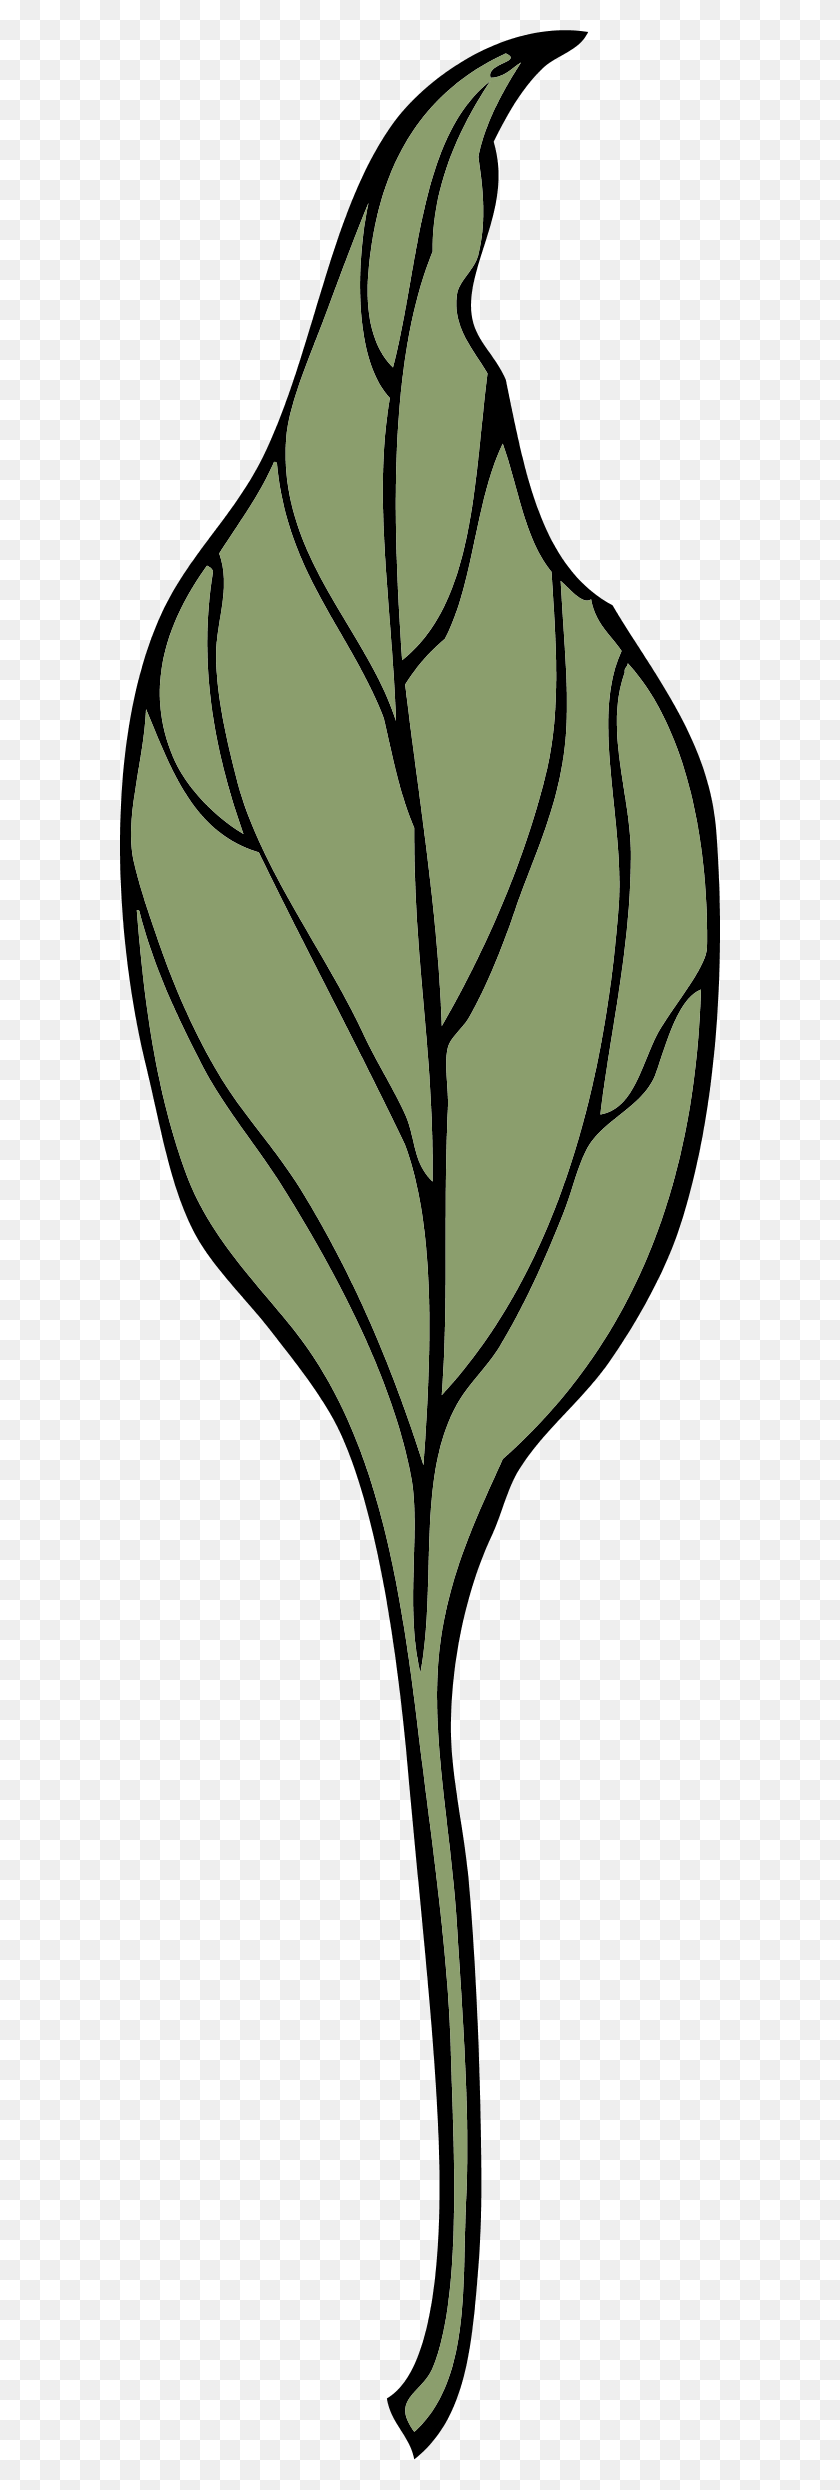 600x2430 Ivy Leaf Clip Art - Ivy Clipart